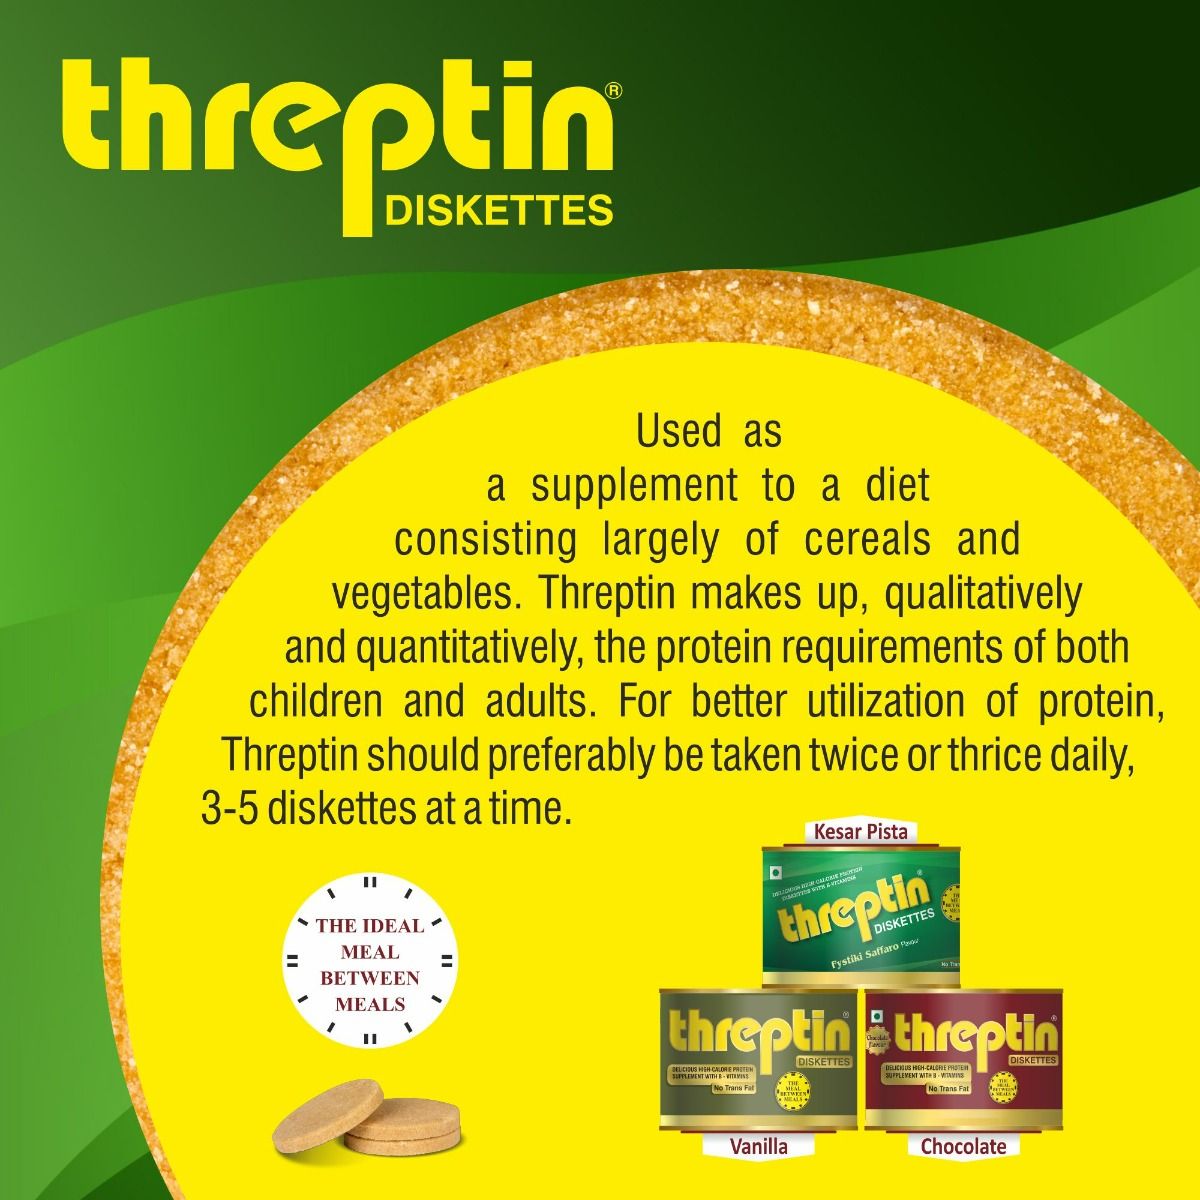 Threptin Vanilla Flavoured Diskettes, 275 gm, Pack of 1 